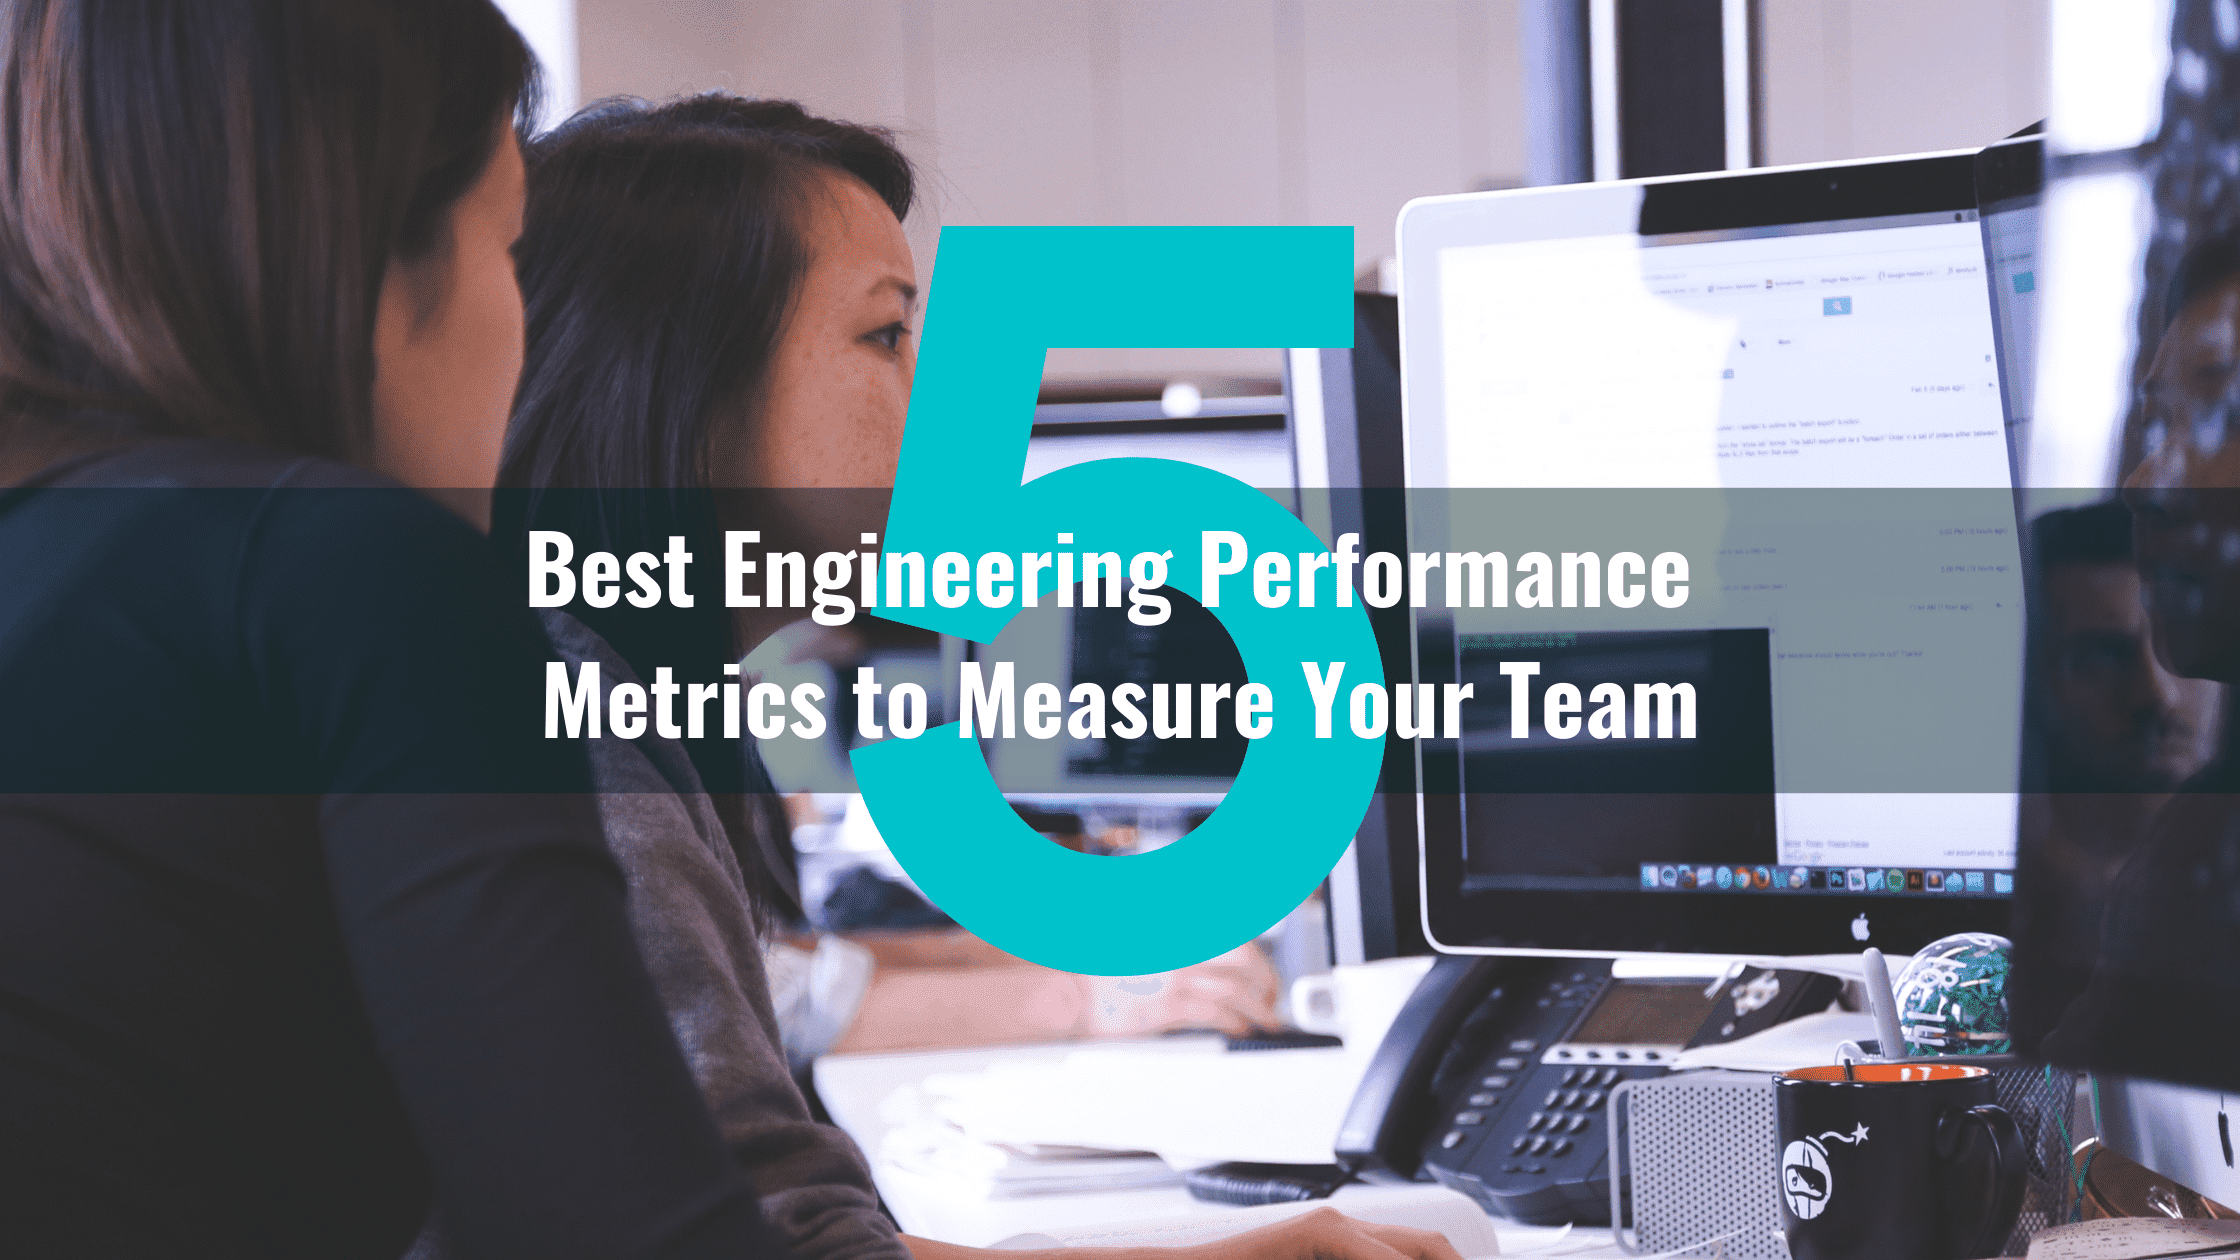 5 Best Engineering Performance Metrics to Measure Your Team